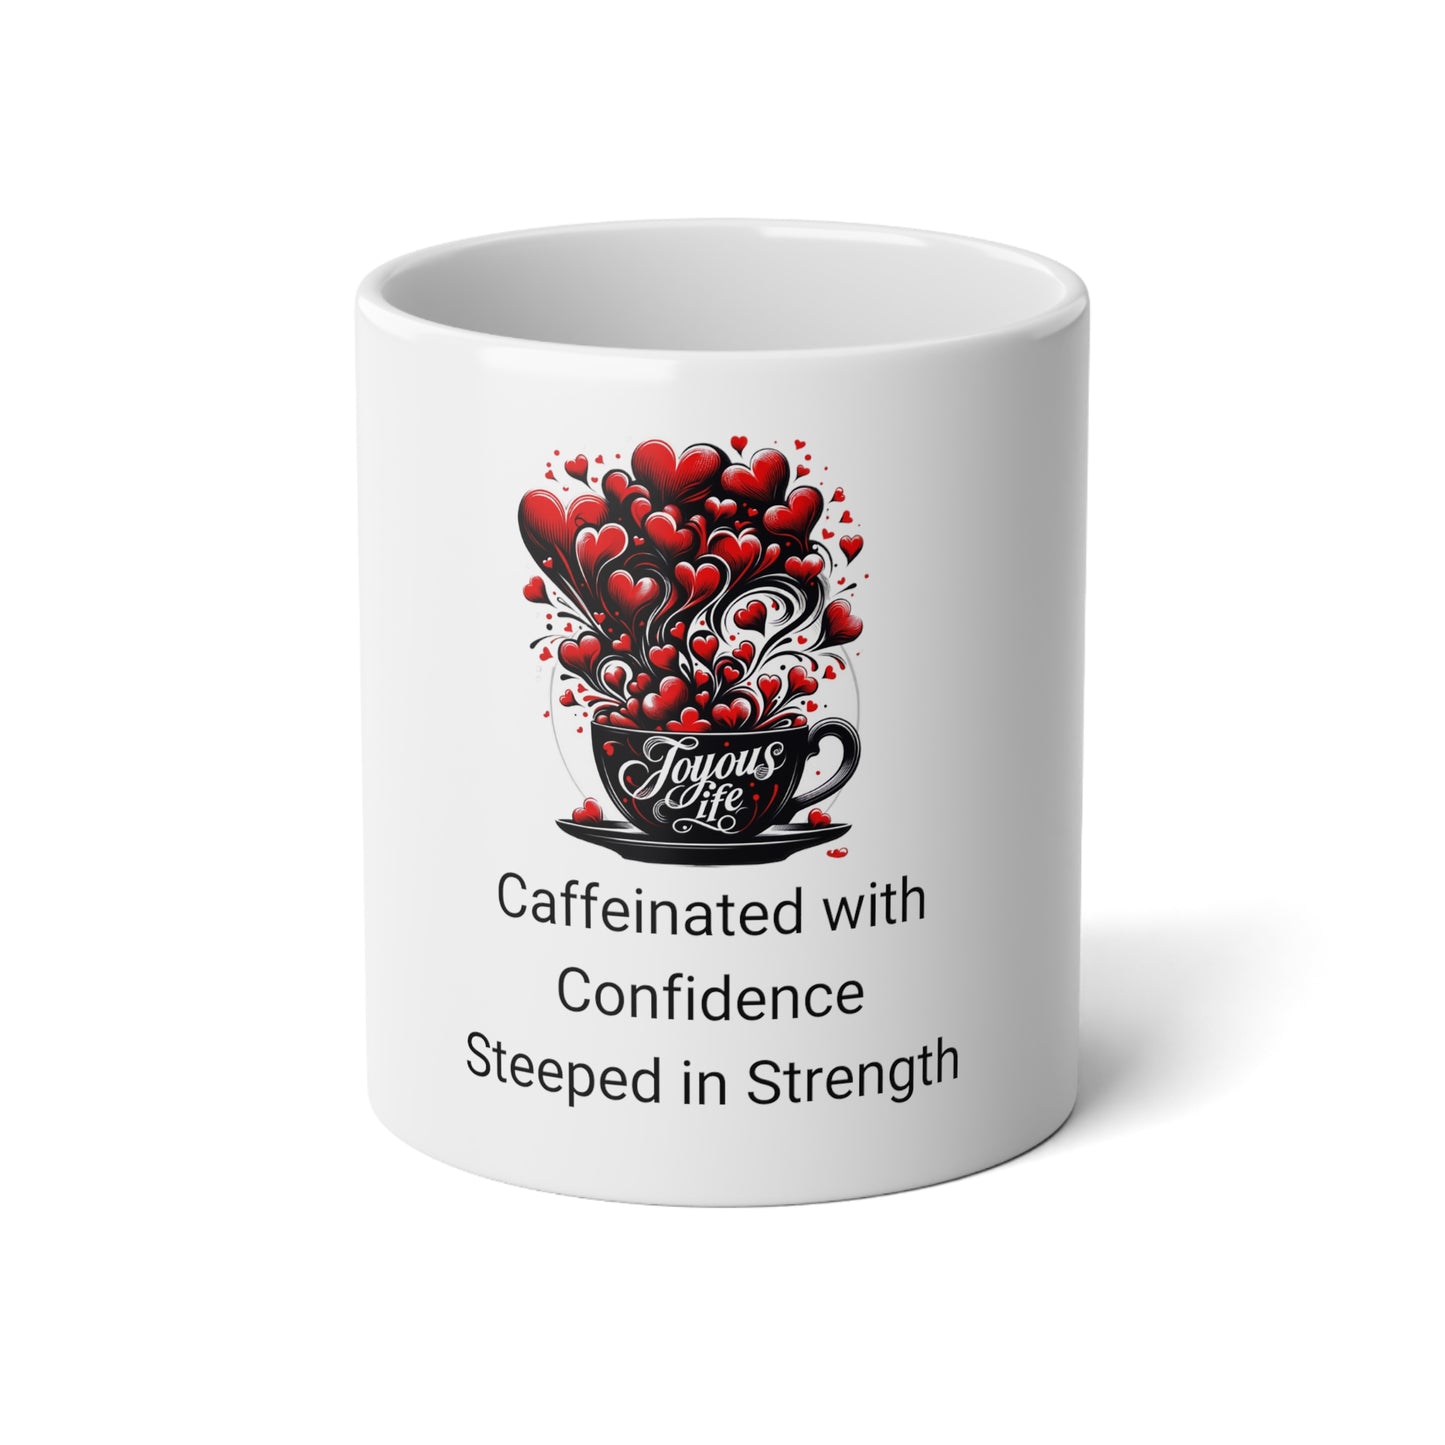 Confidence & Strength Caffeinator Mug, Joyous Life Journals